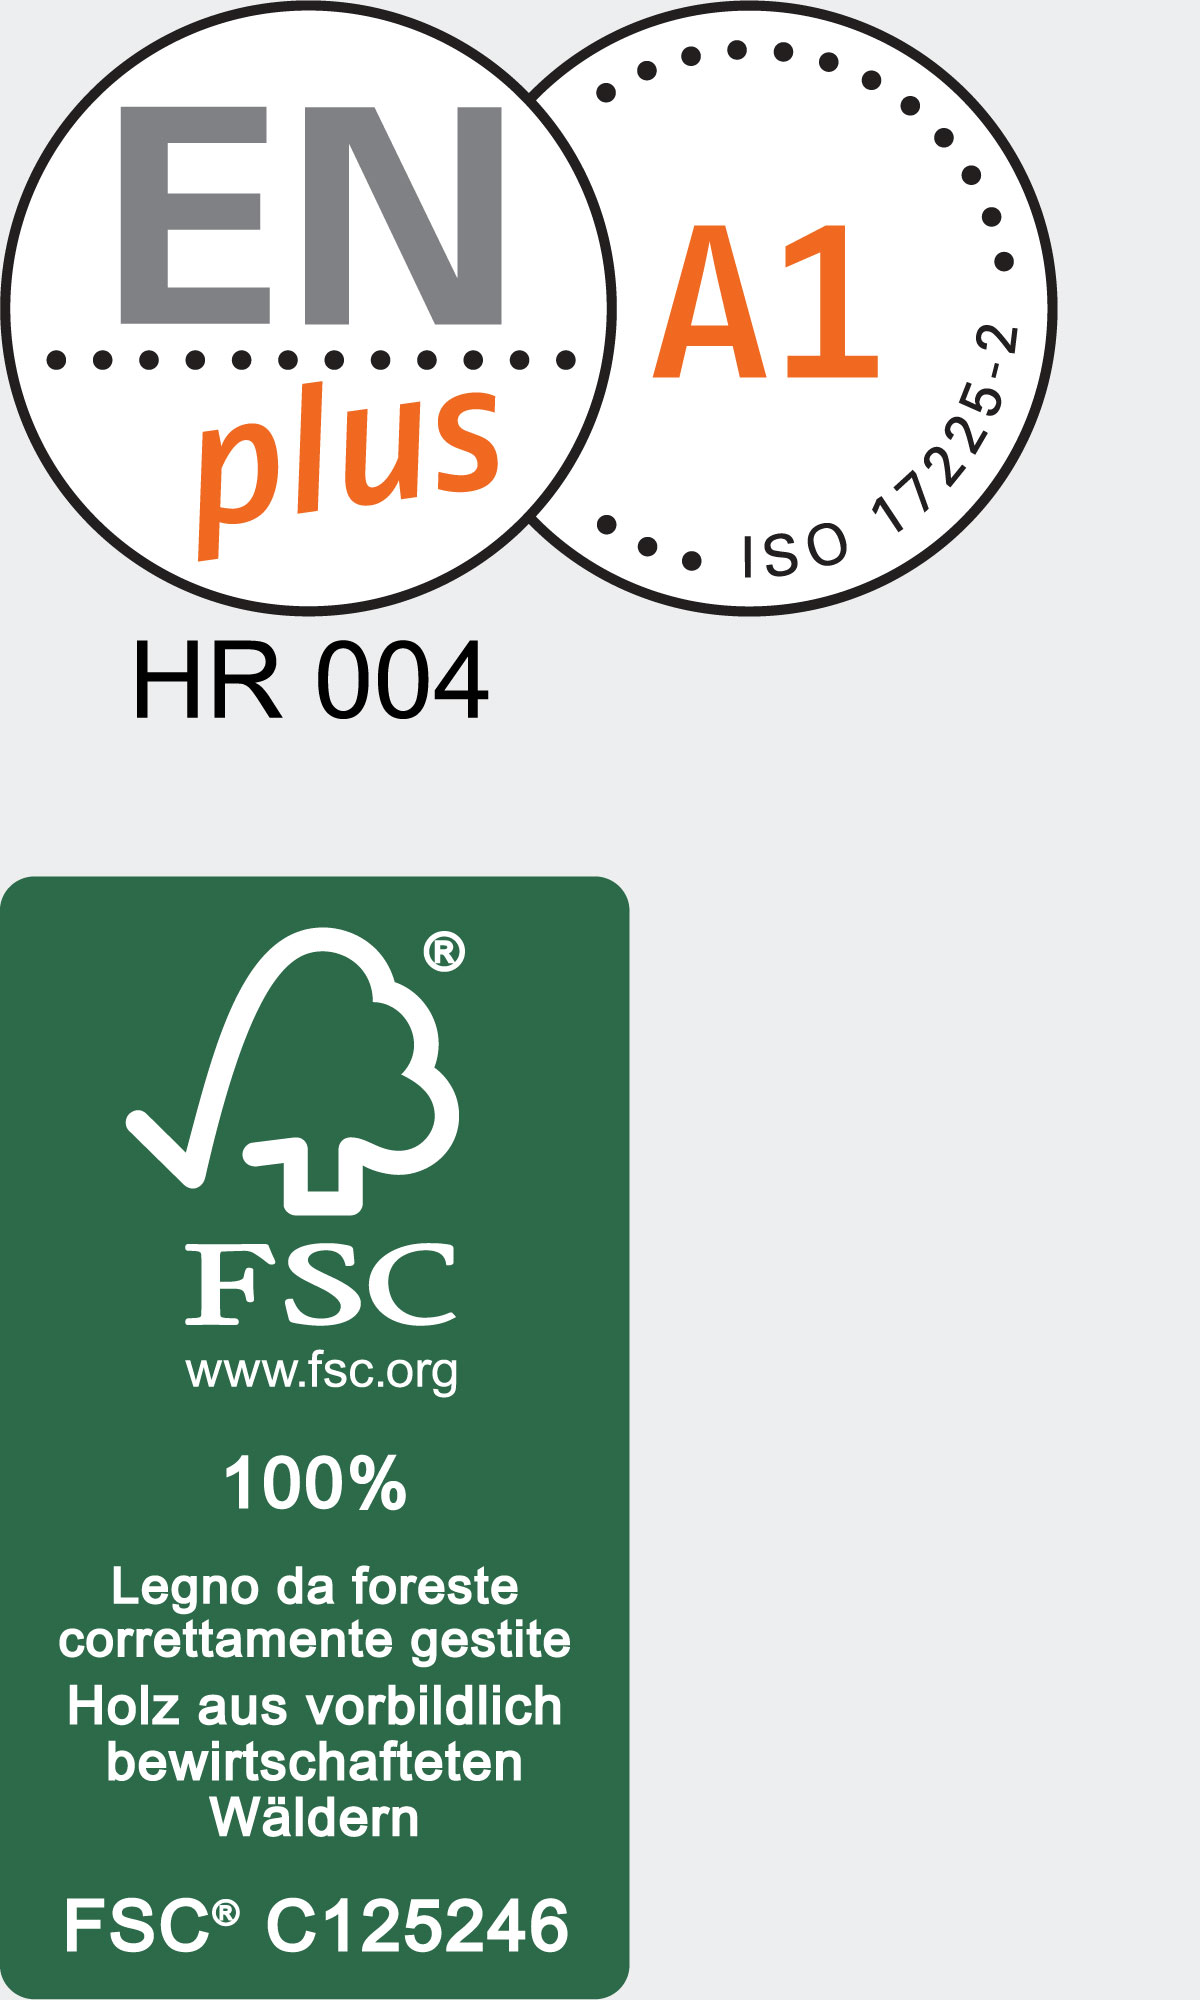 FSC and ENplusA1 Certificates